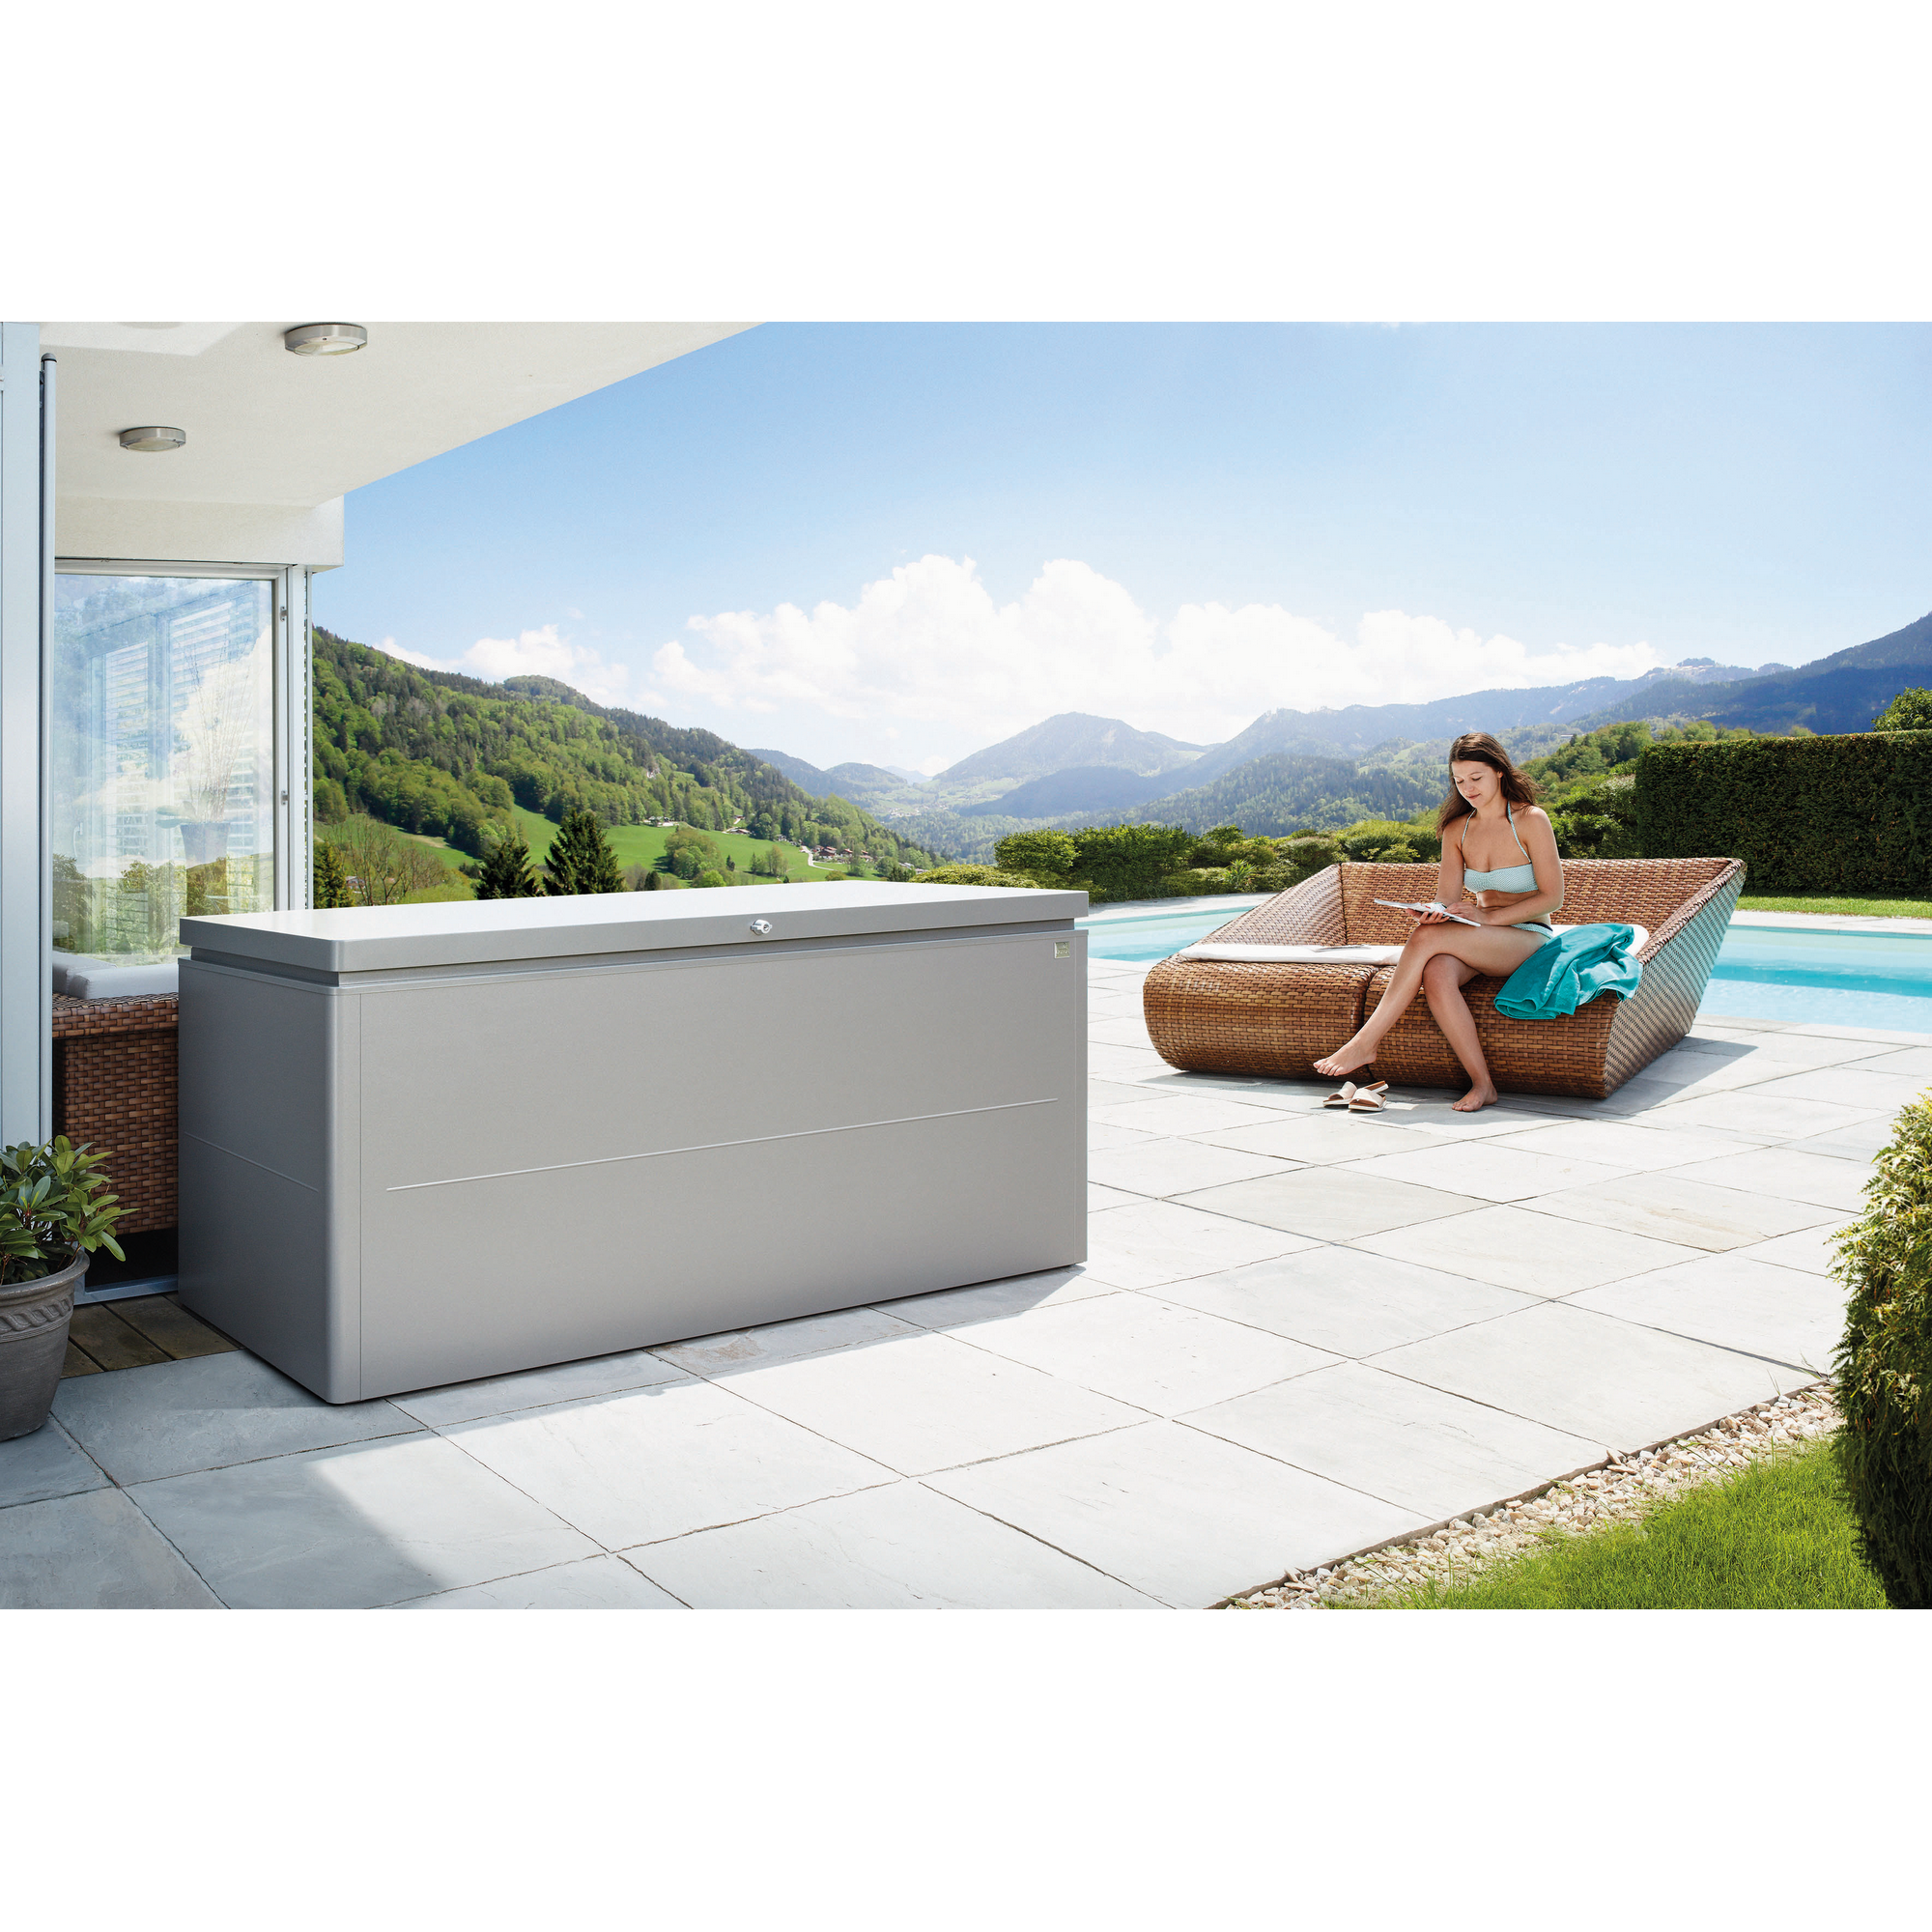 Aufbewahrungsbox 'LoungeBox 200' quarzgrau metallic 200 x 84 x 88,5 cm + product picture